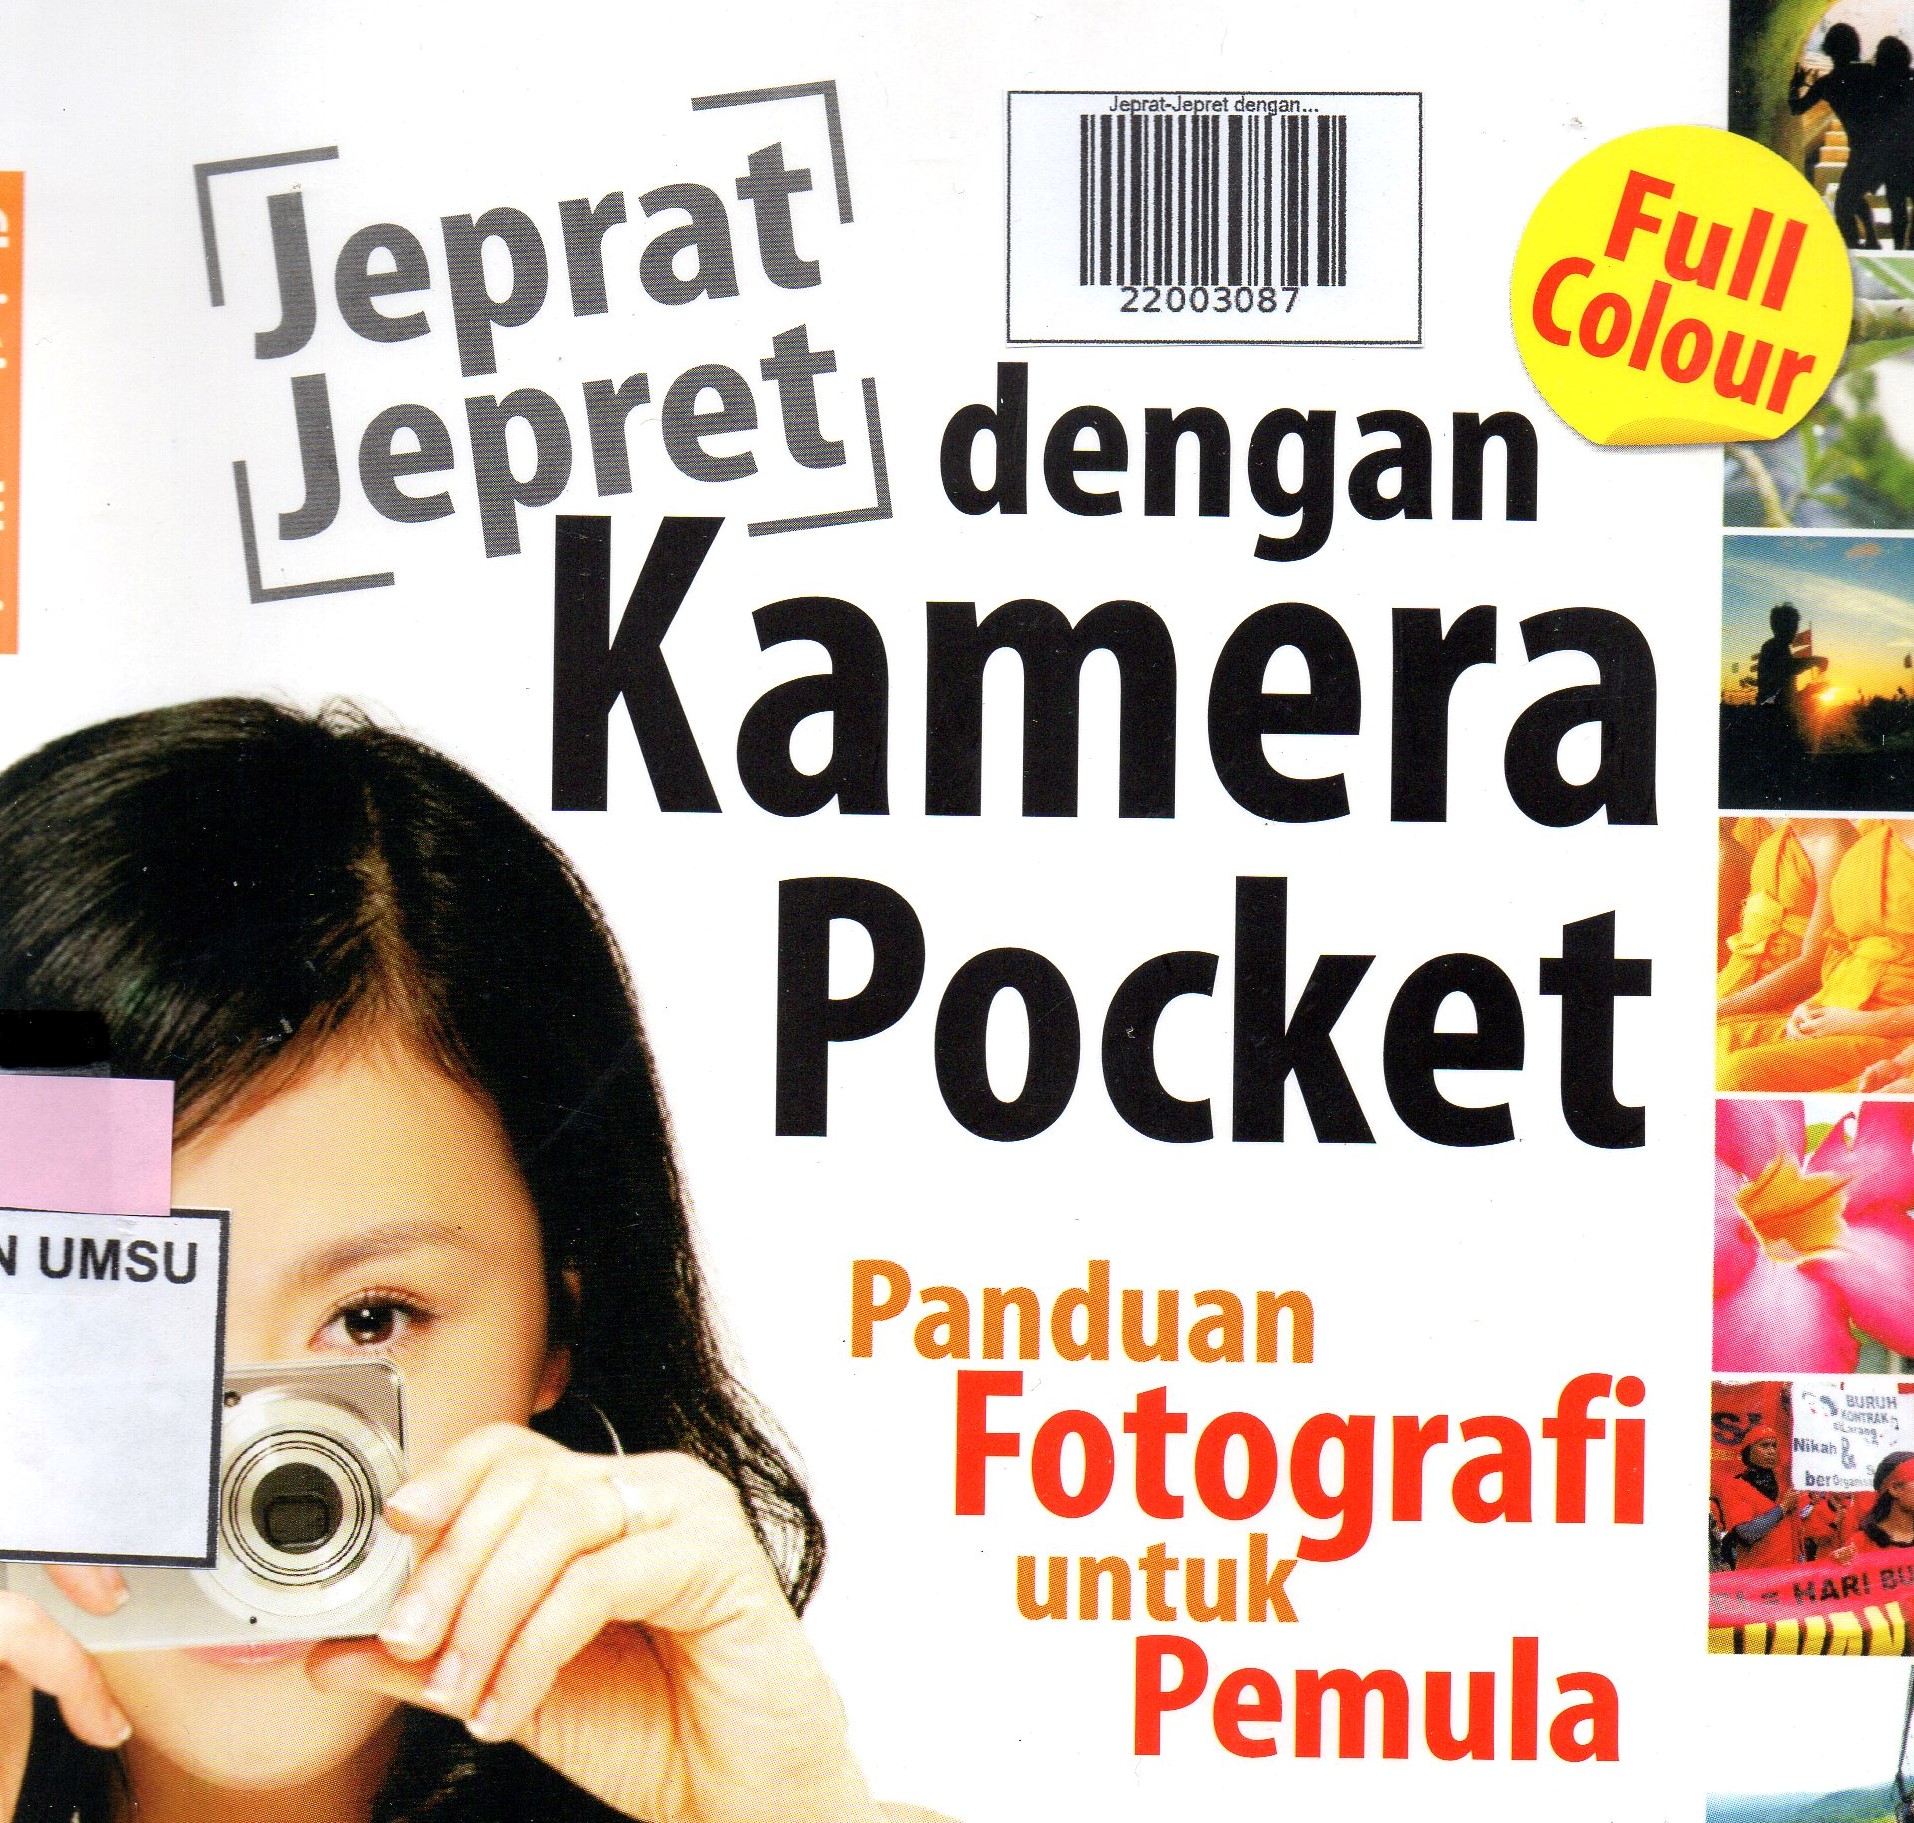 Jeprat-Jepret dengan Kamera Pocket